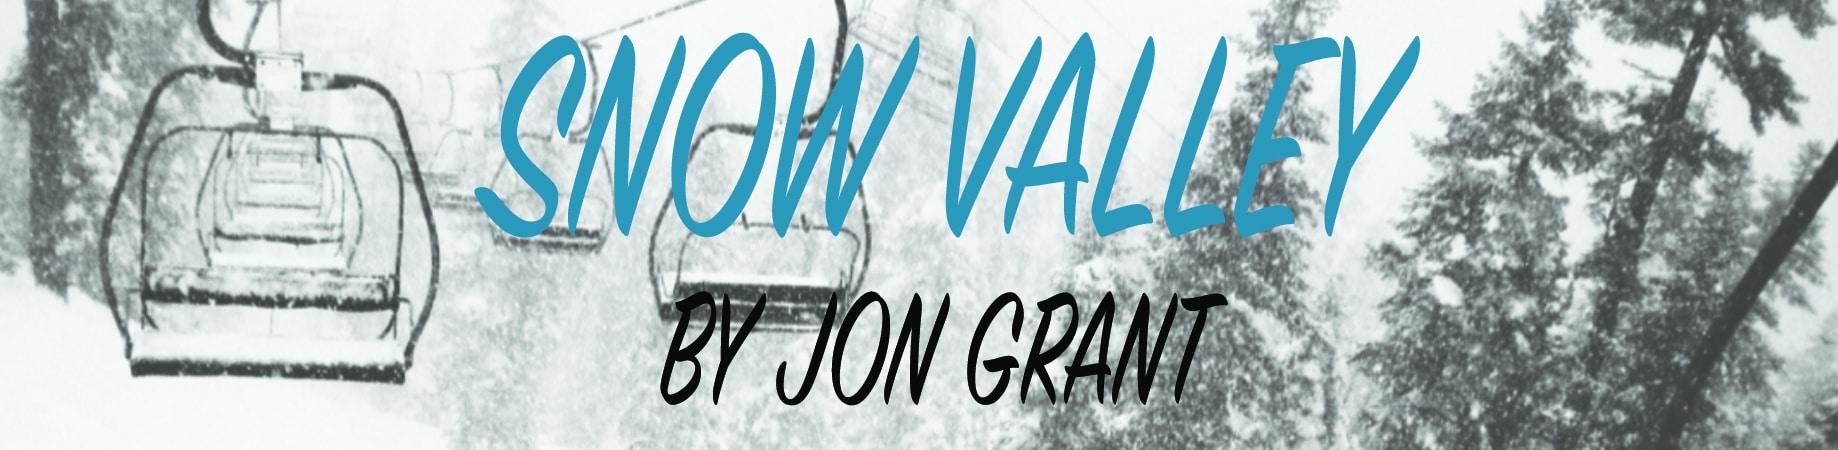 Snow Valle by Jon Grant